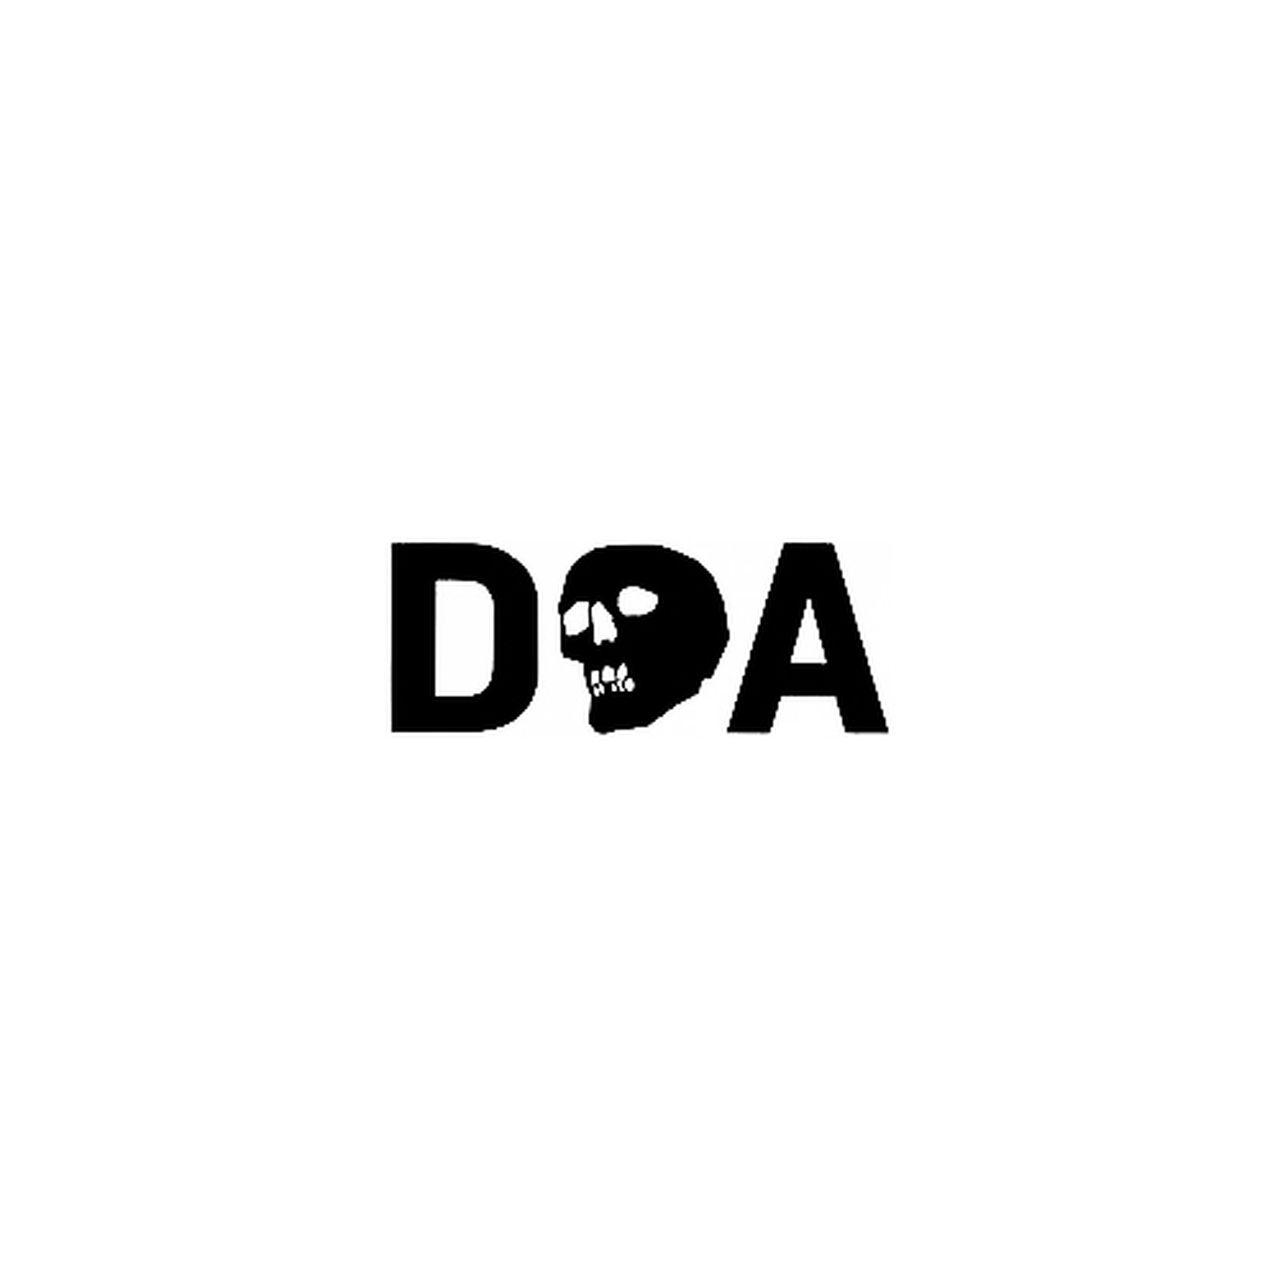 Doa Logo - Capita DOA Logo Vinyl Decal